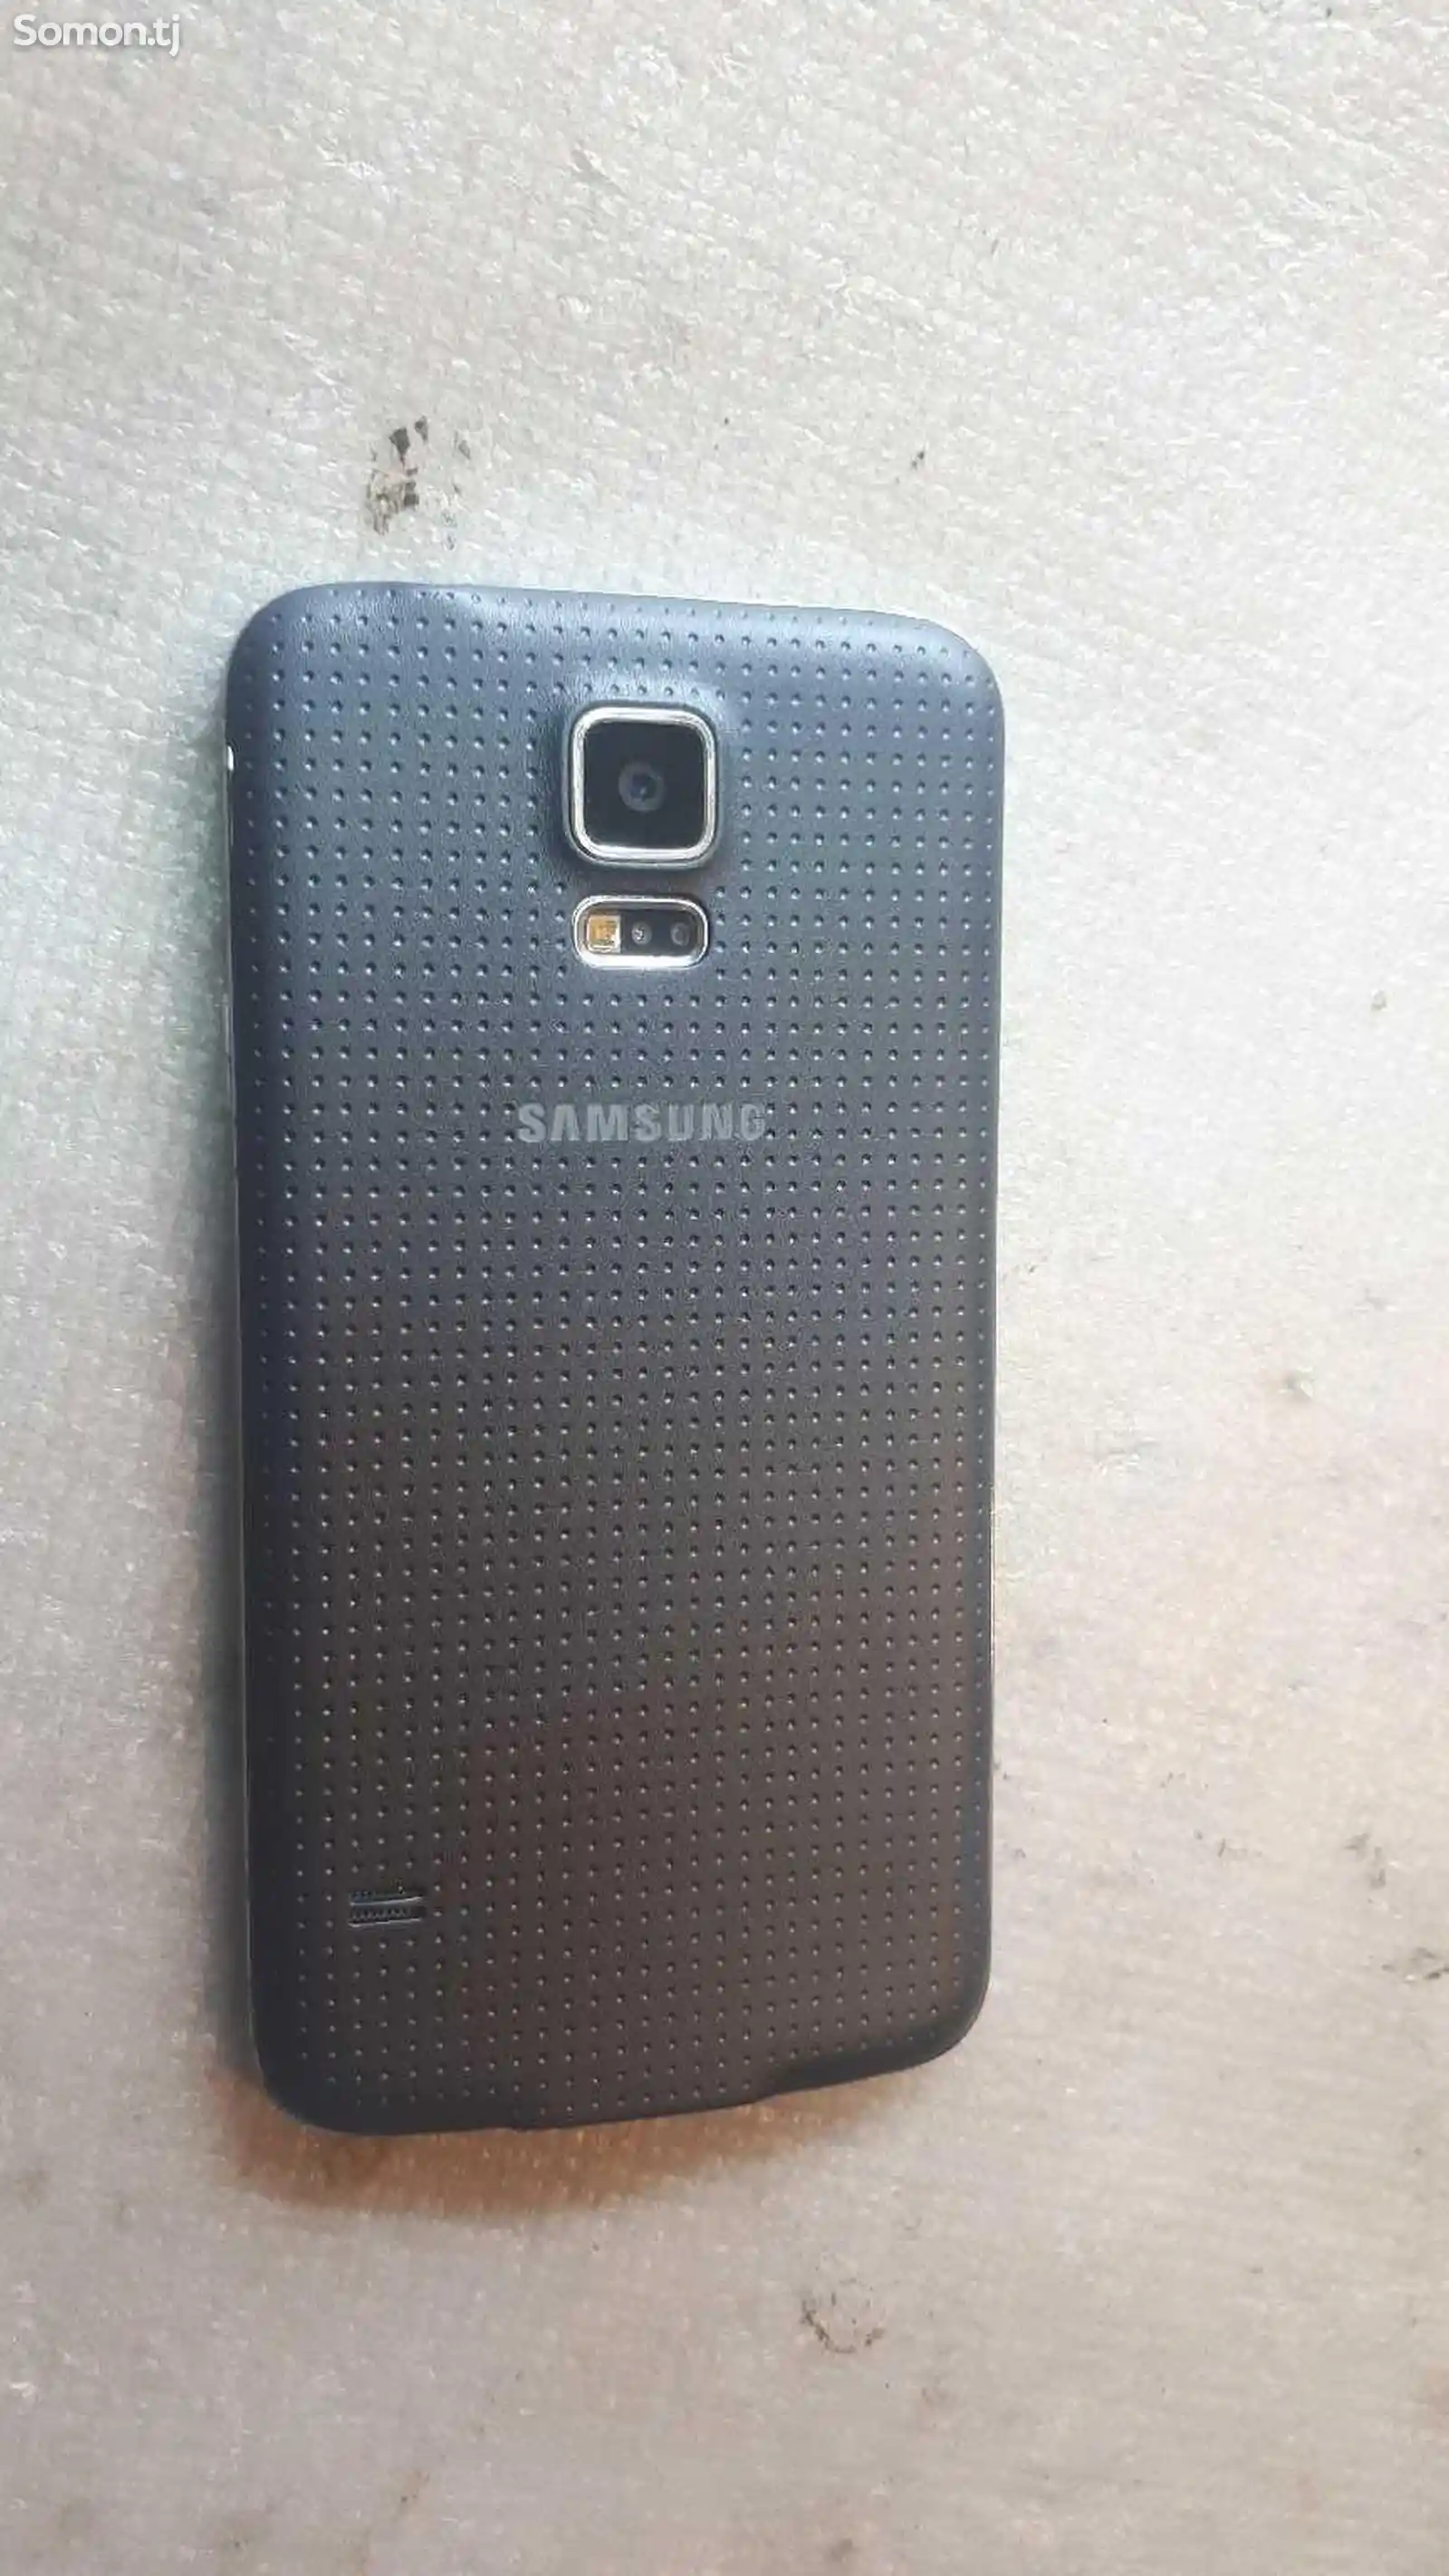 Samsung Galaxy S5 duos-4